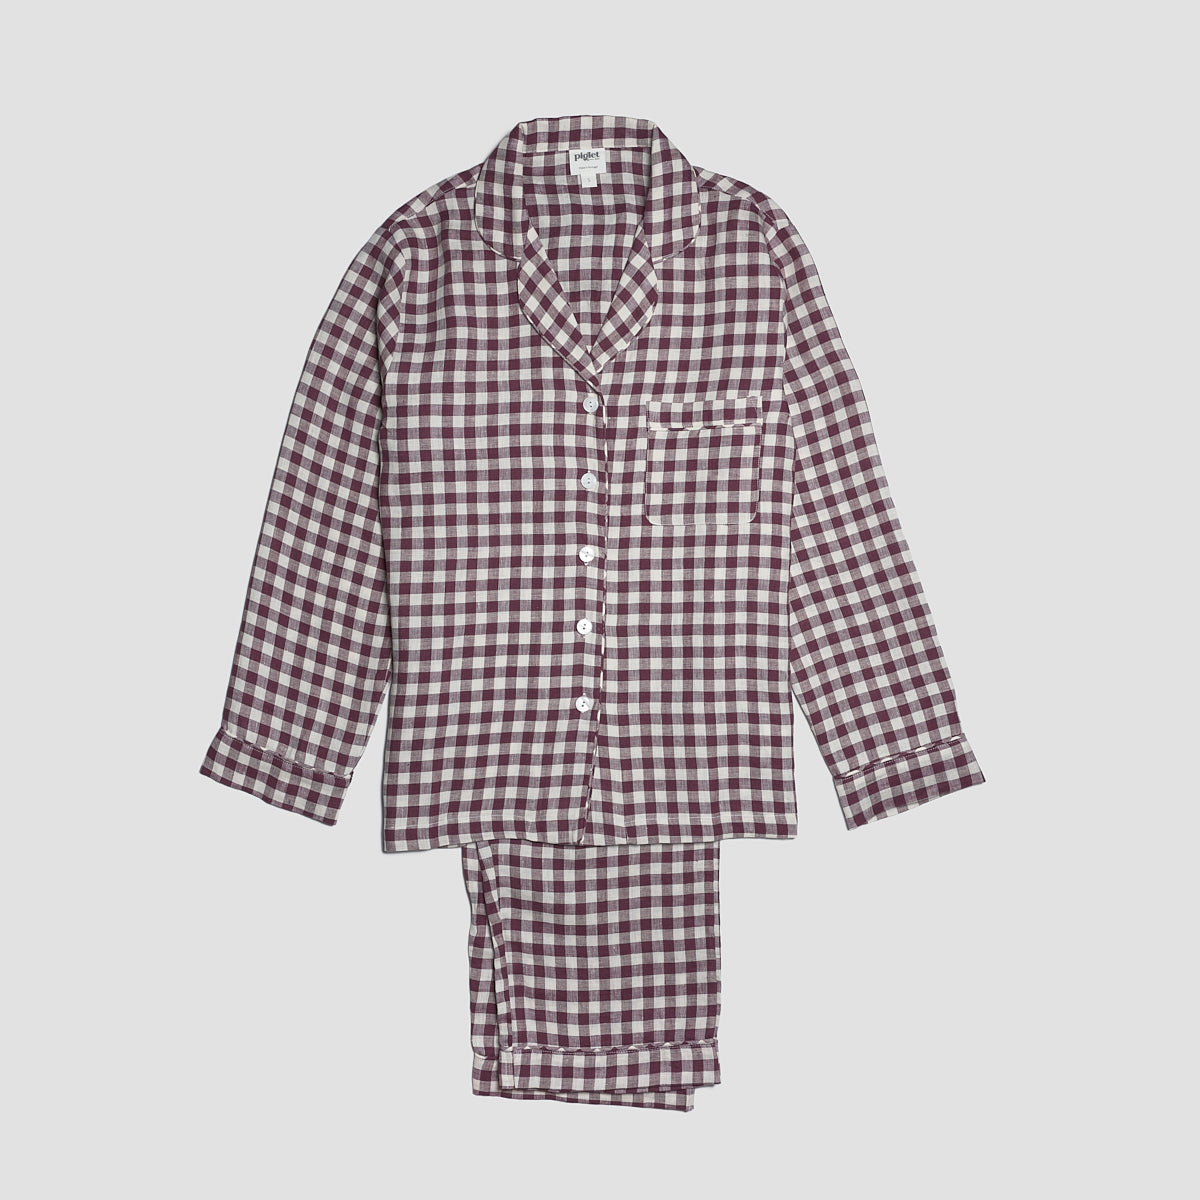 Midnight Stripe Linen Pajama Set